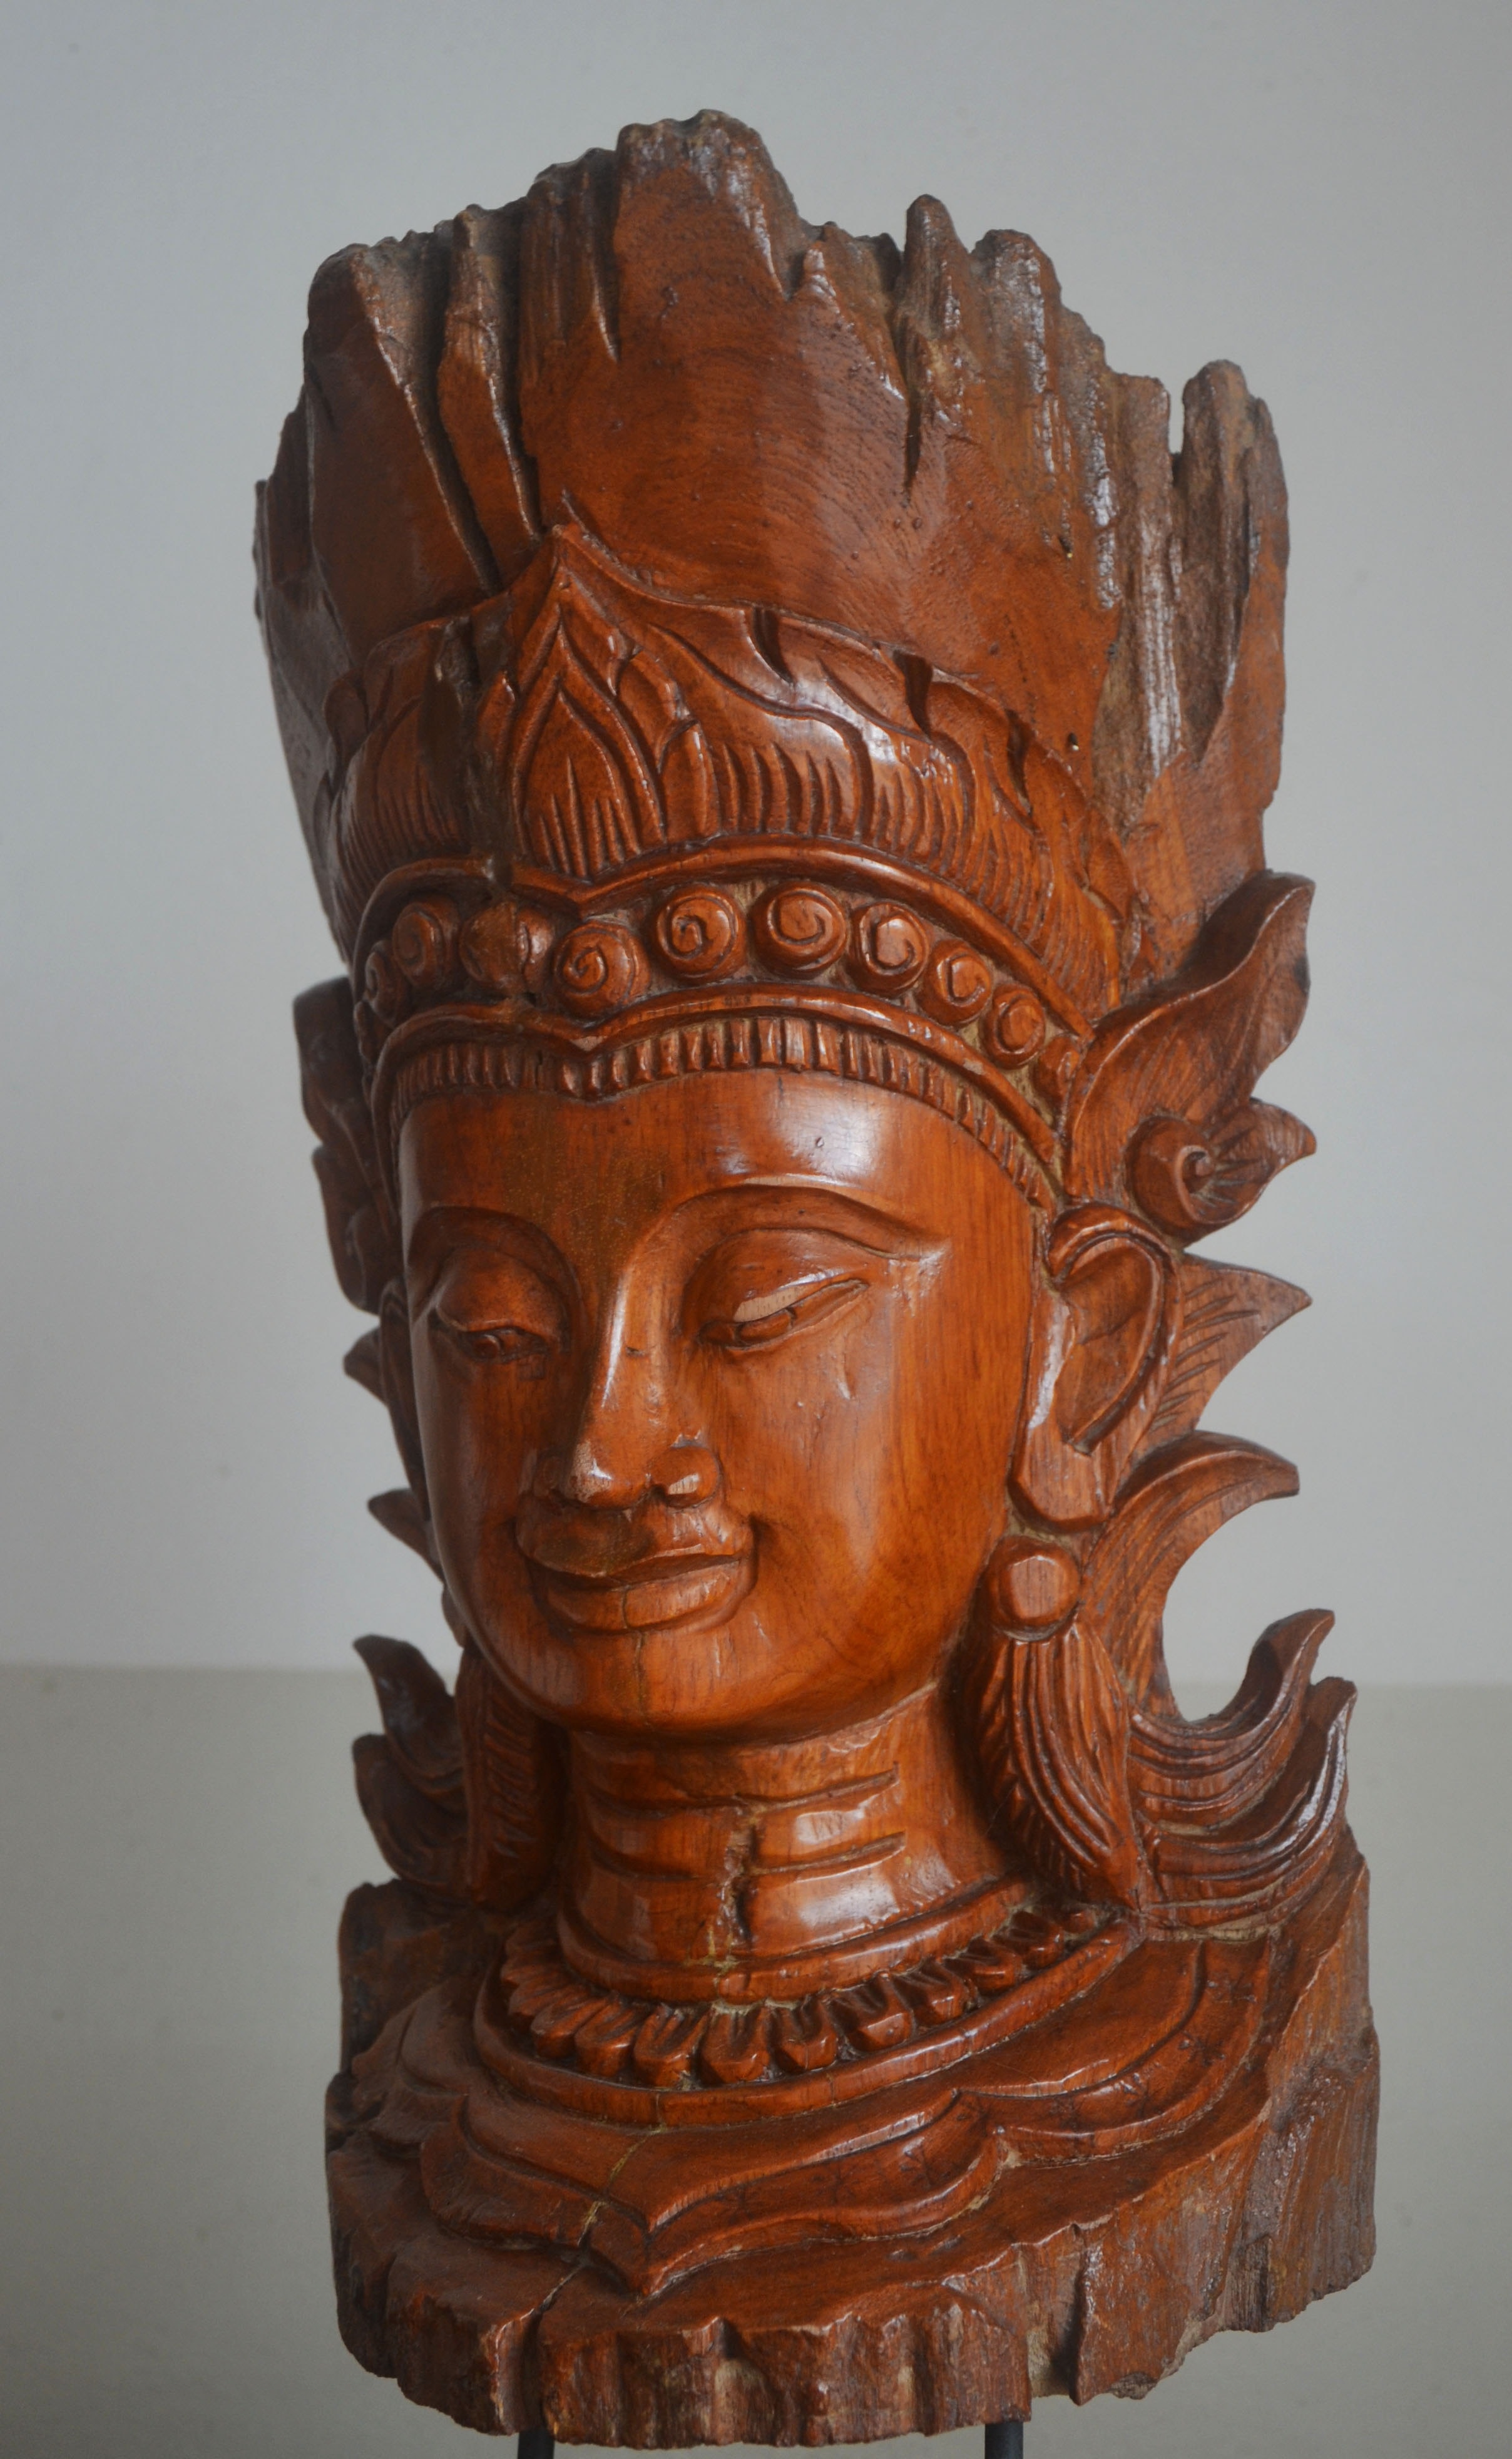 photo of brown wooden head bust sculpture